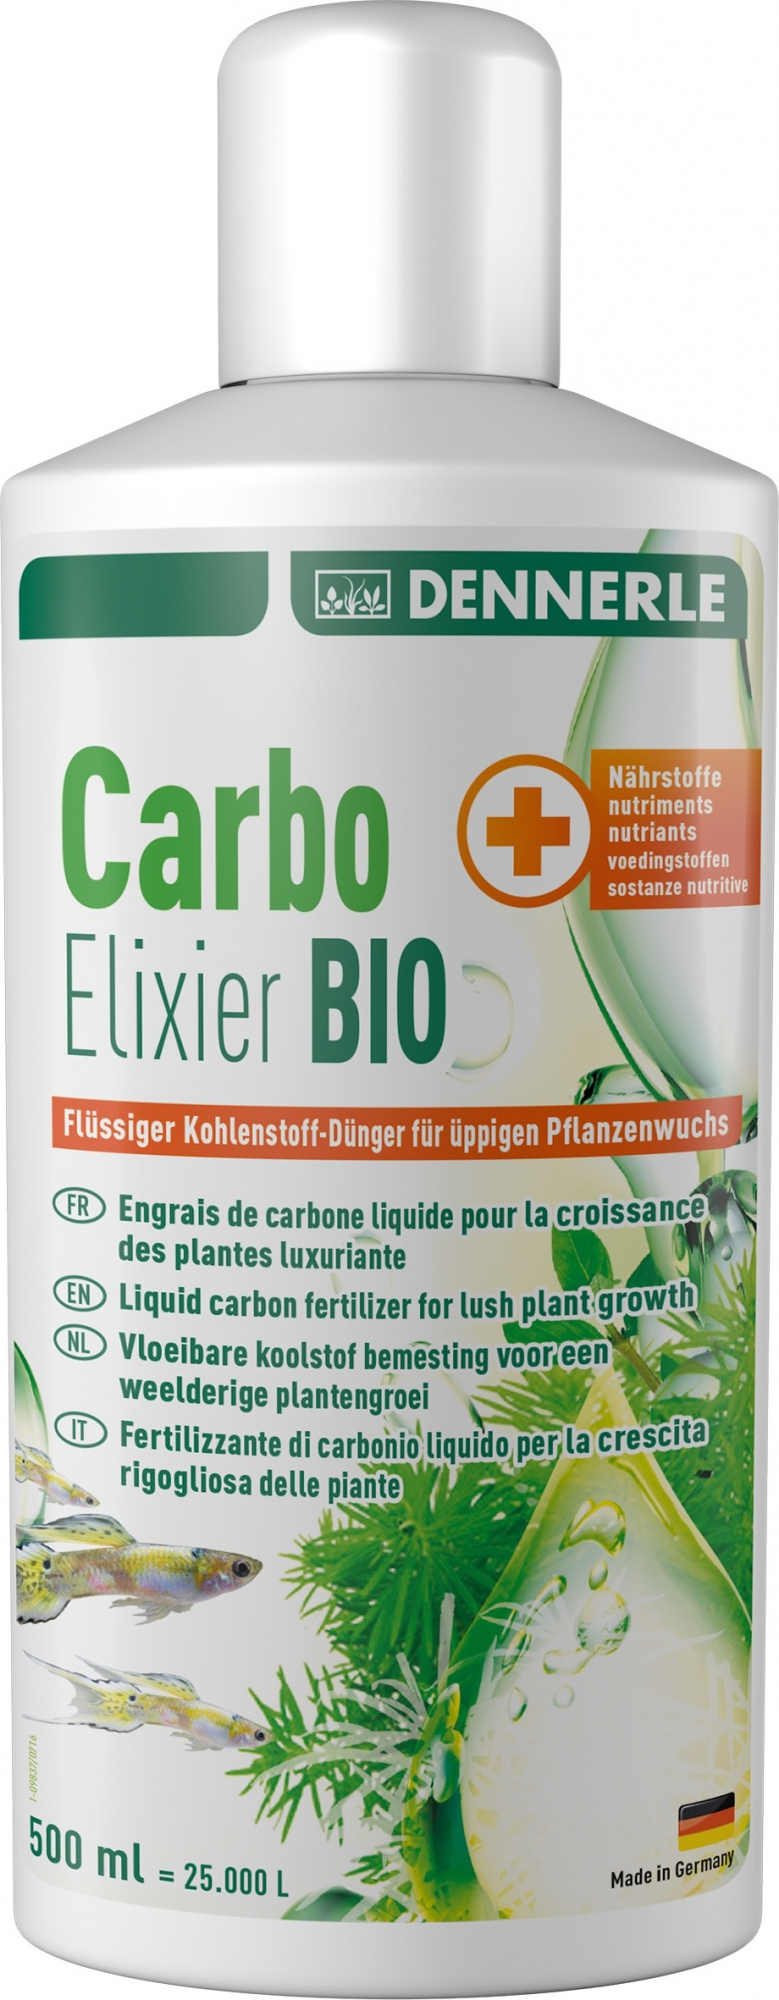 Dennerle Carbo Elixir Bio Adubo carbónico Líquido